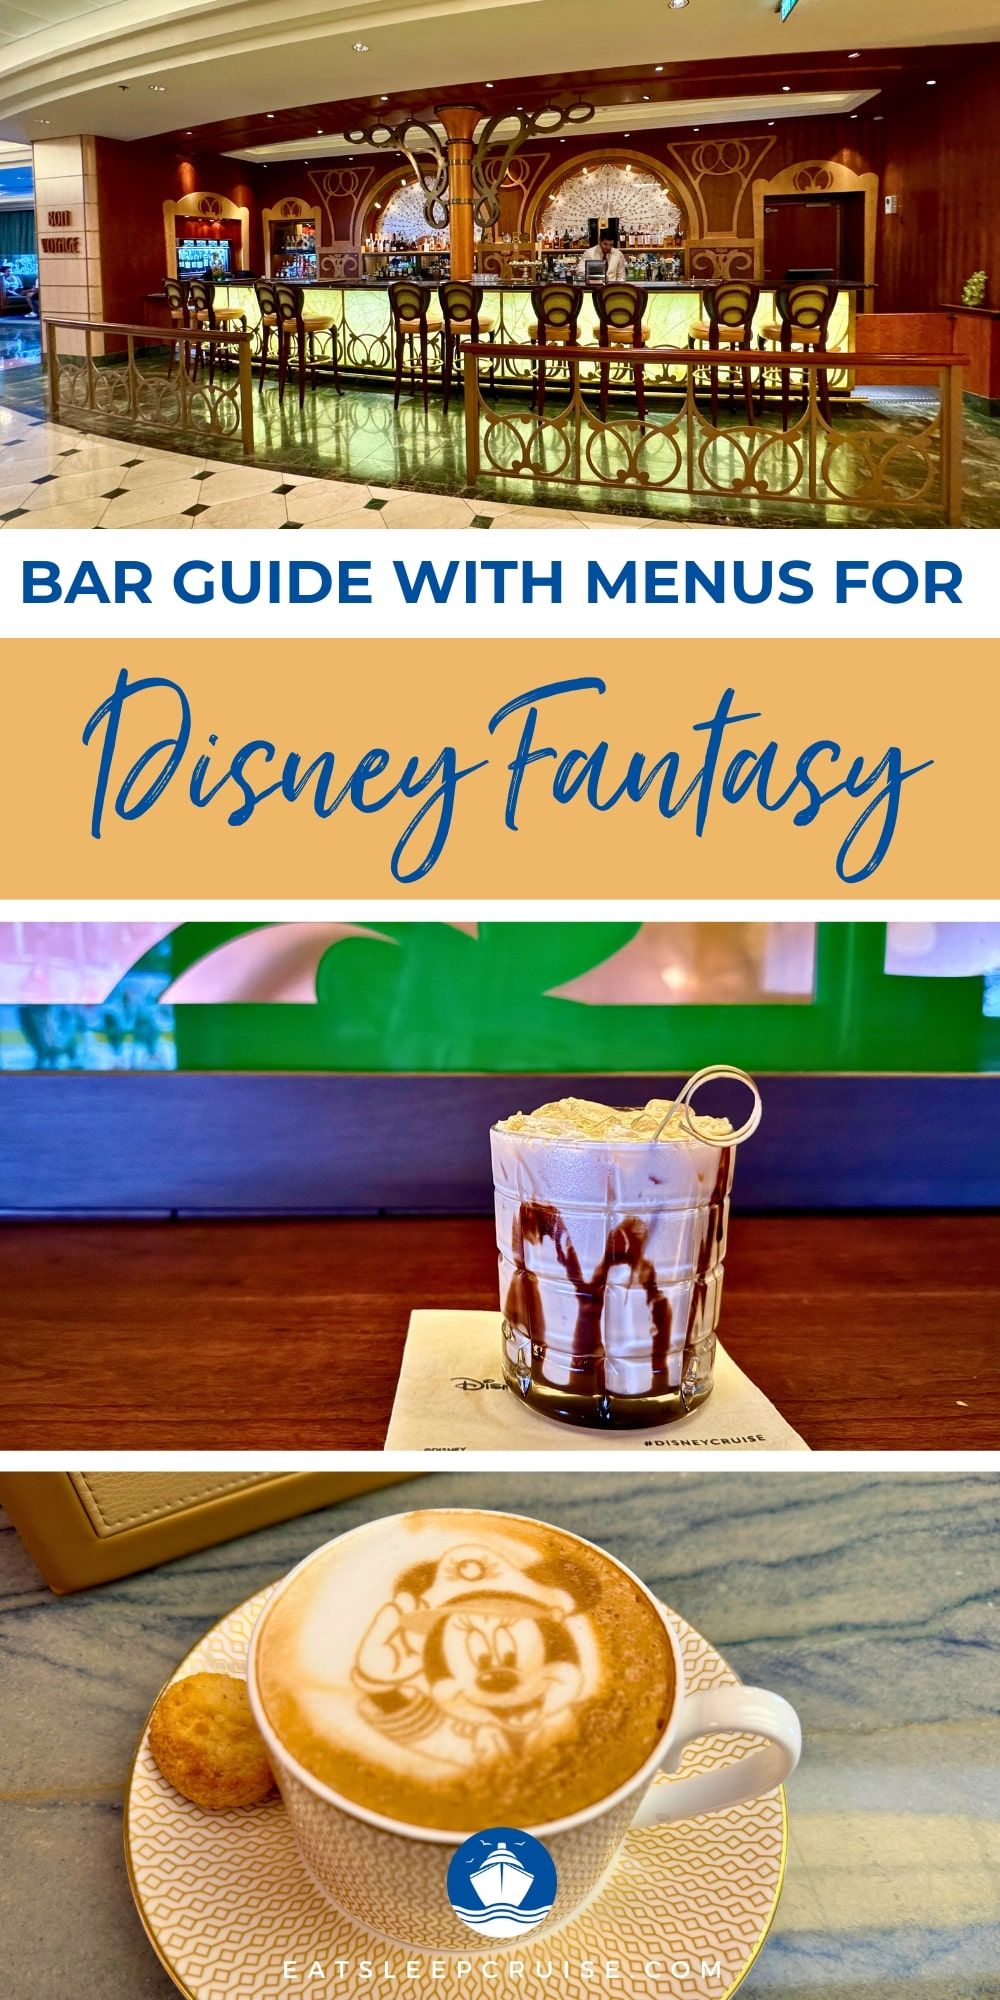 Disney Fantasy bars